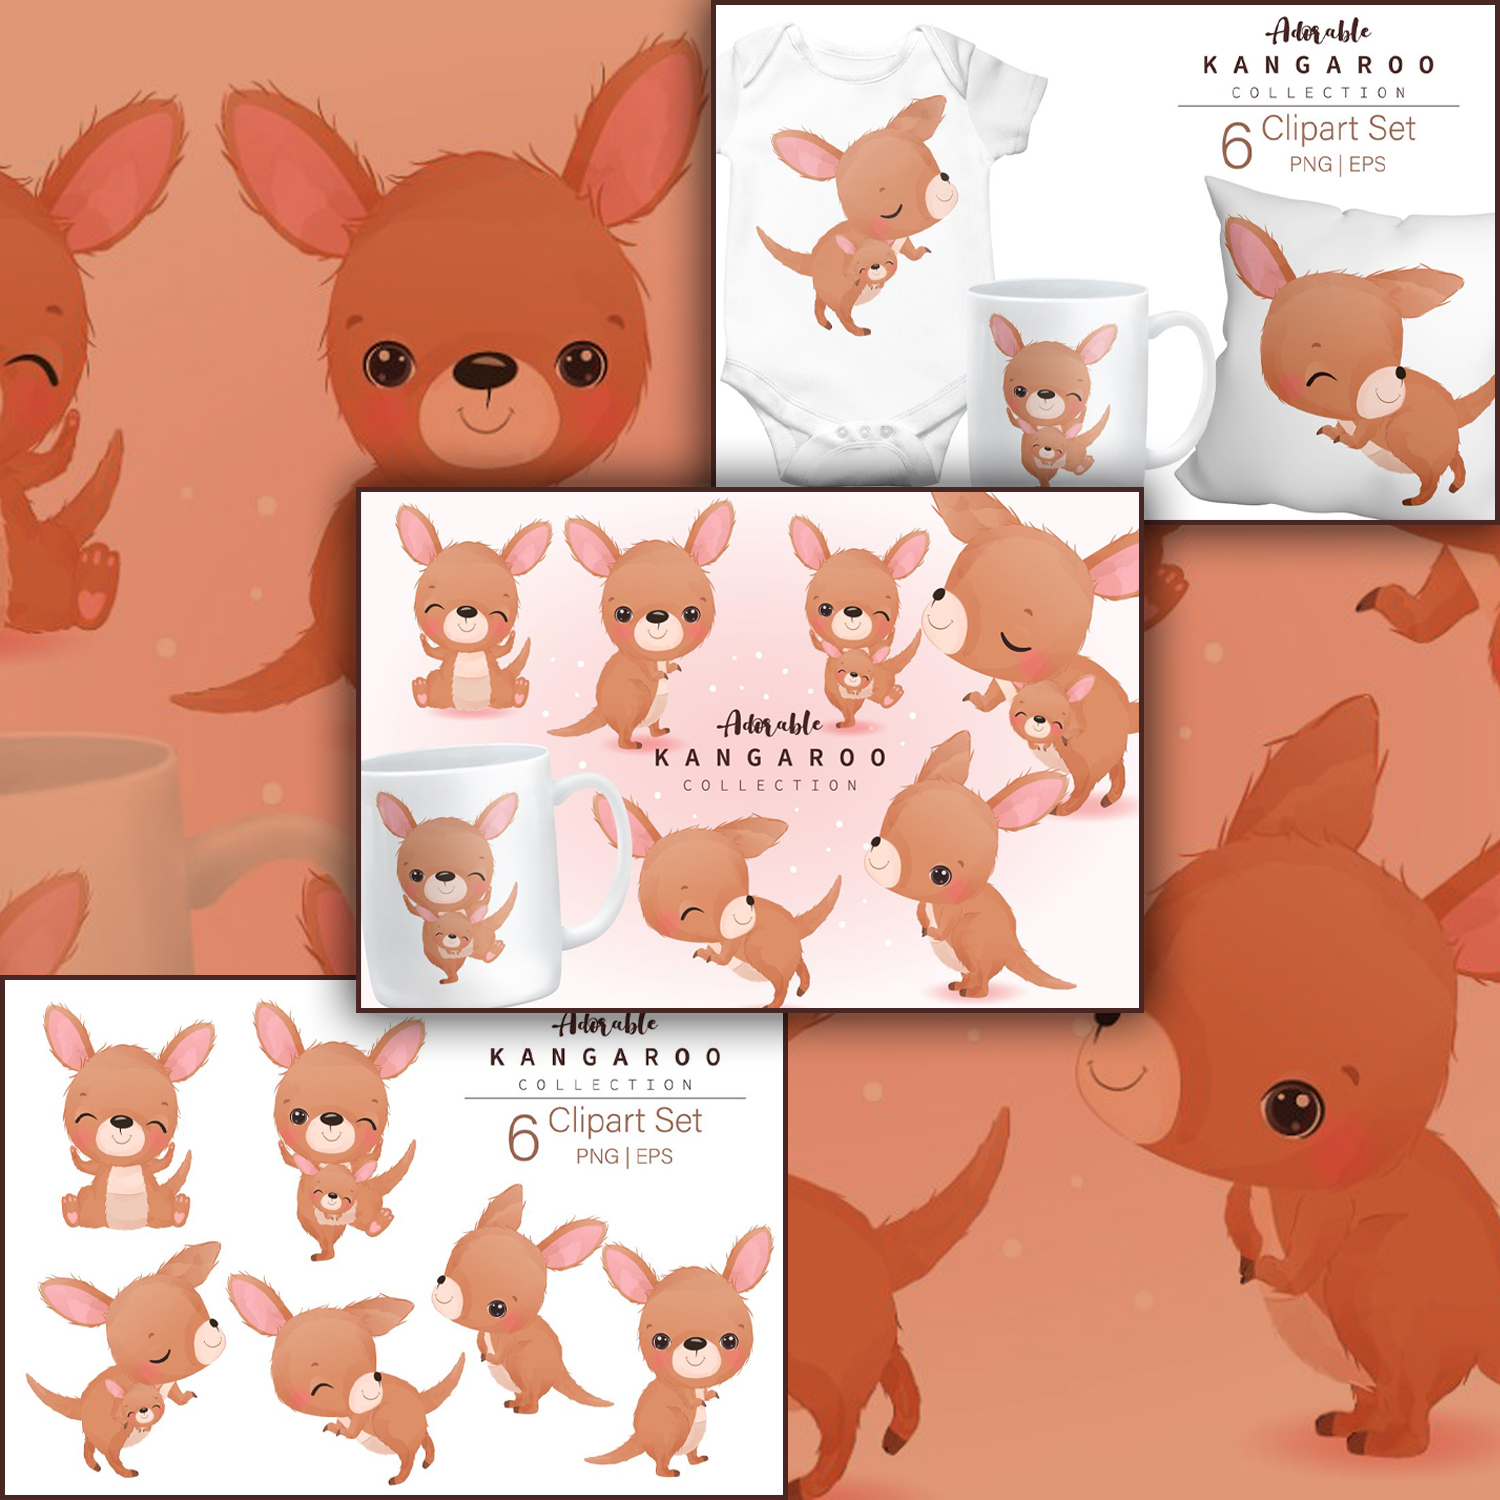 Adorable Kangaroo Clipart Set Design cover image.